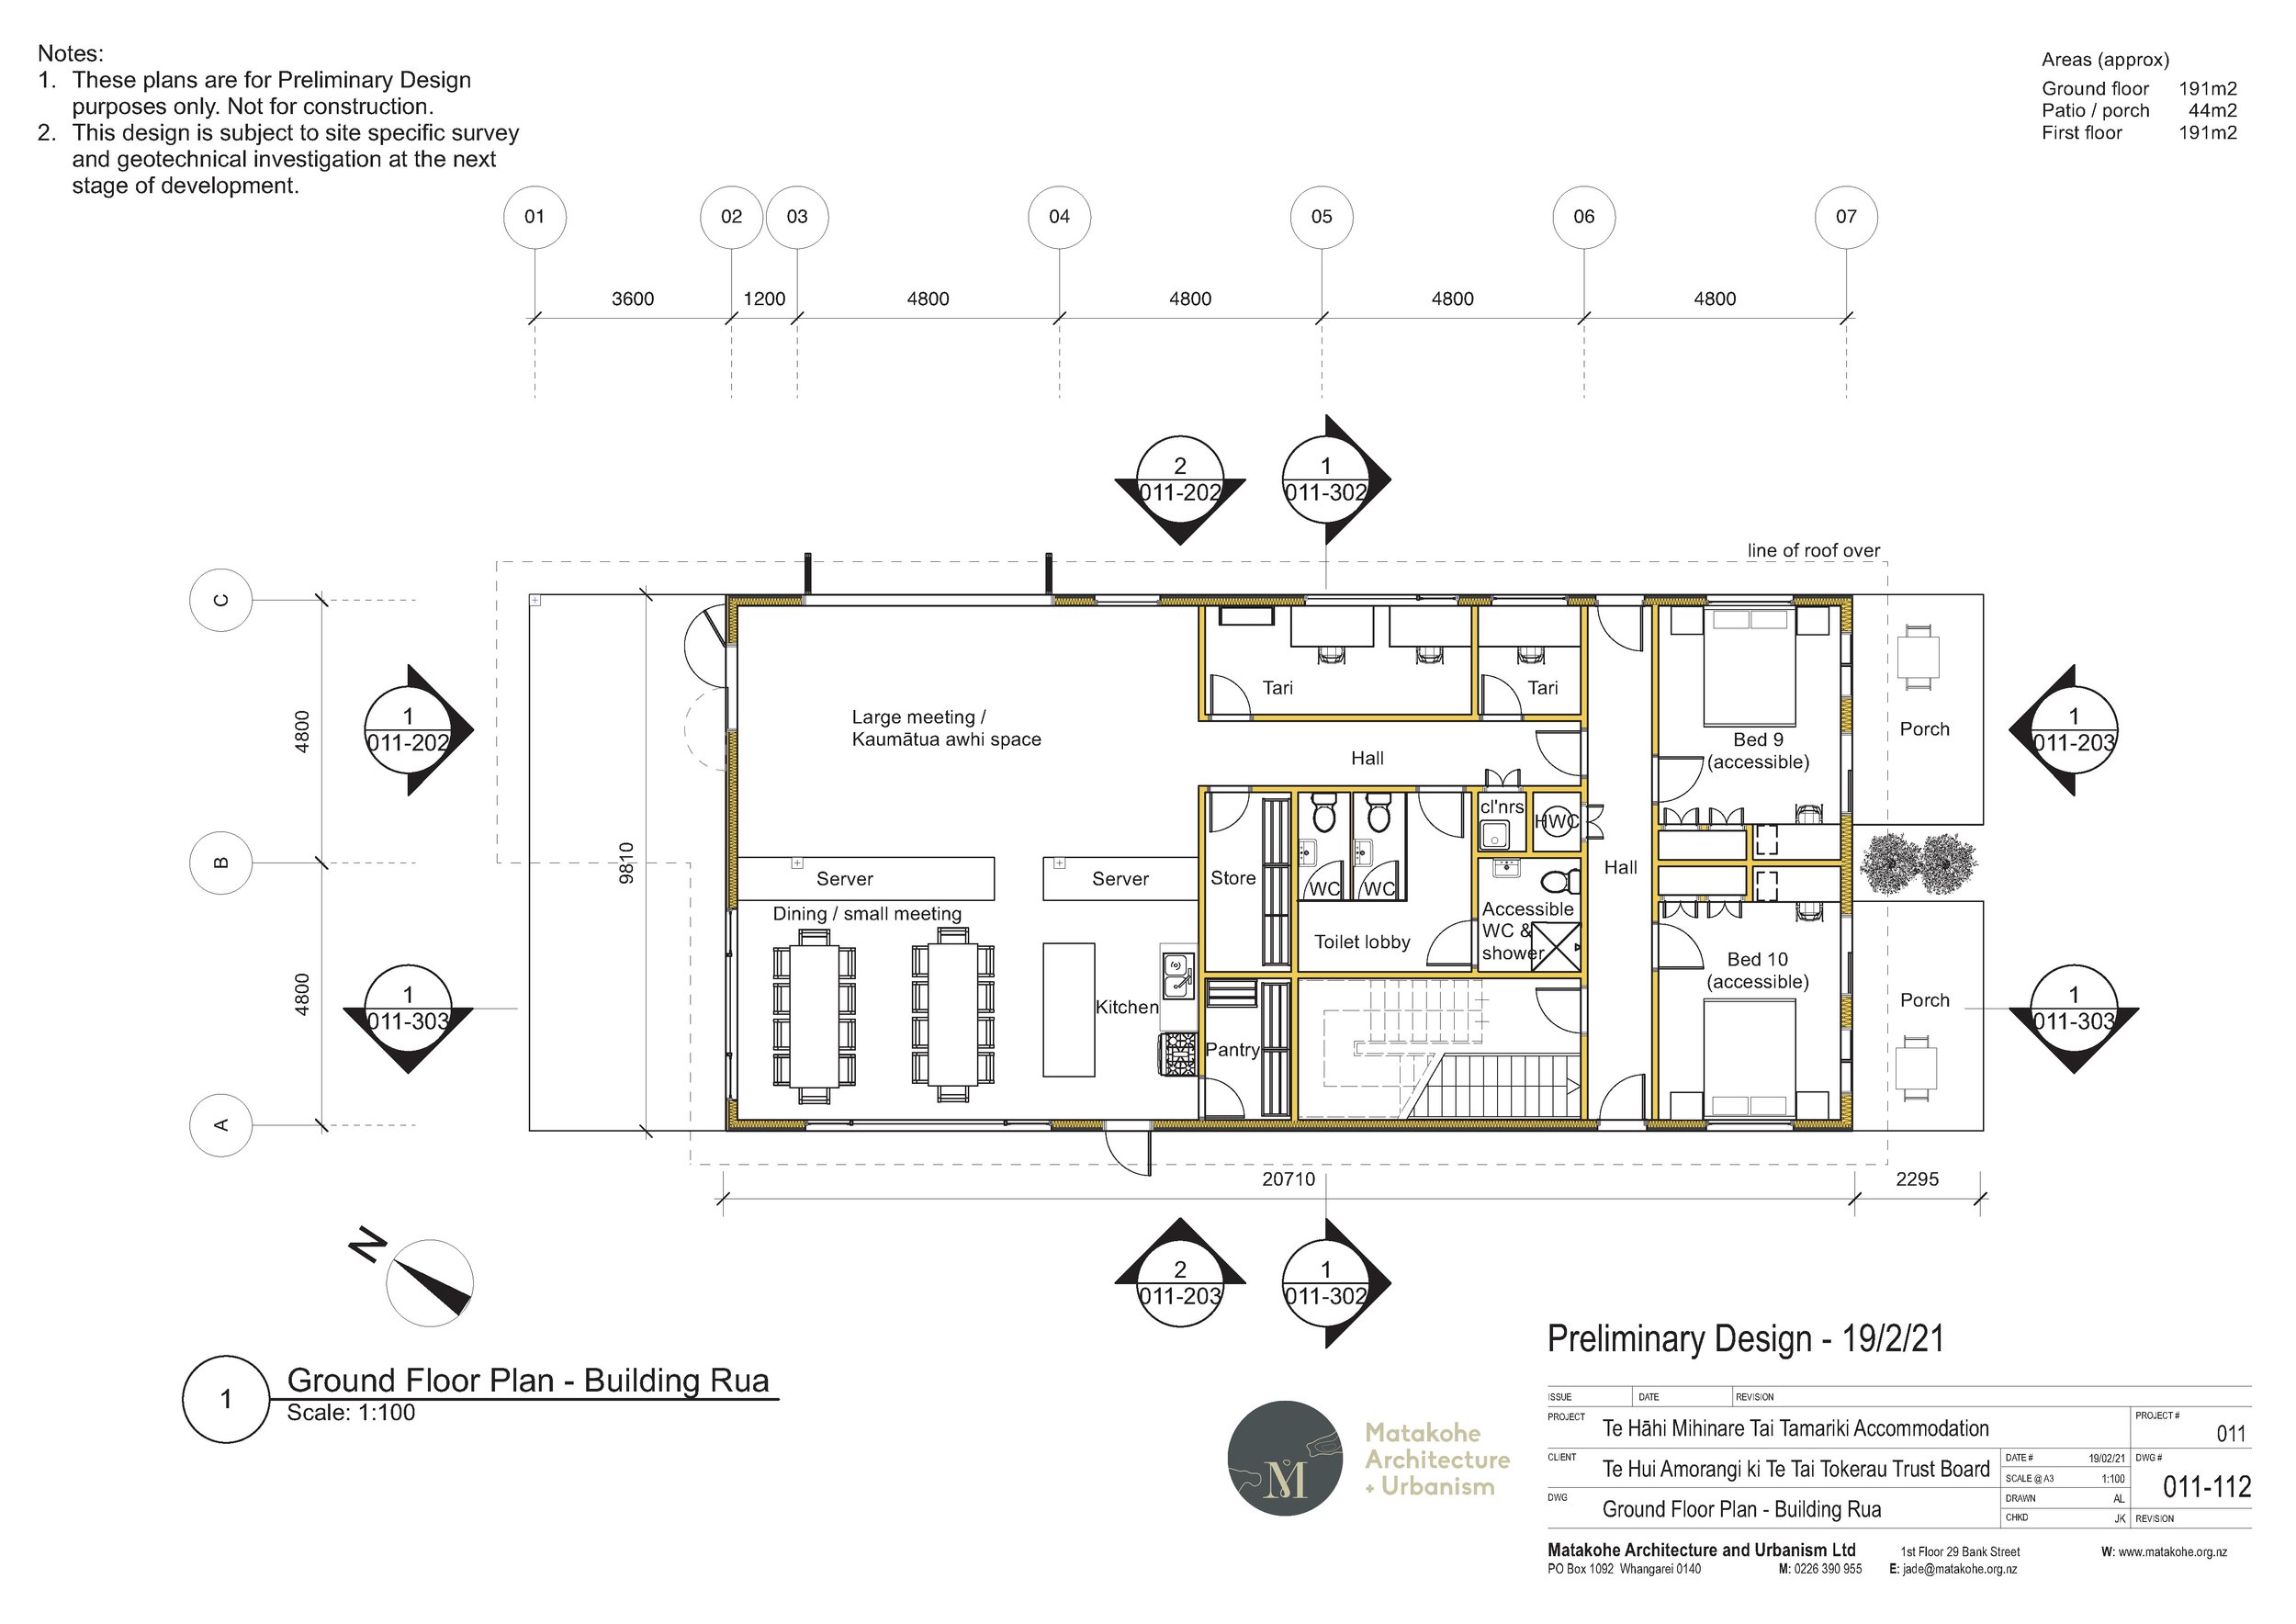 TTA_Ground Floor Plan - Building Rua.jpg